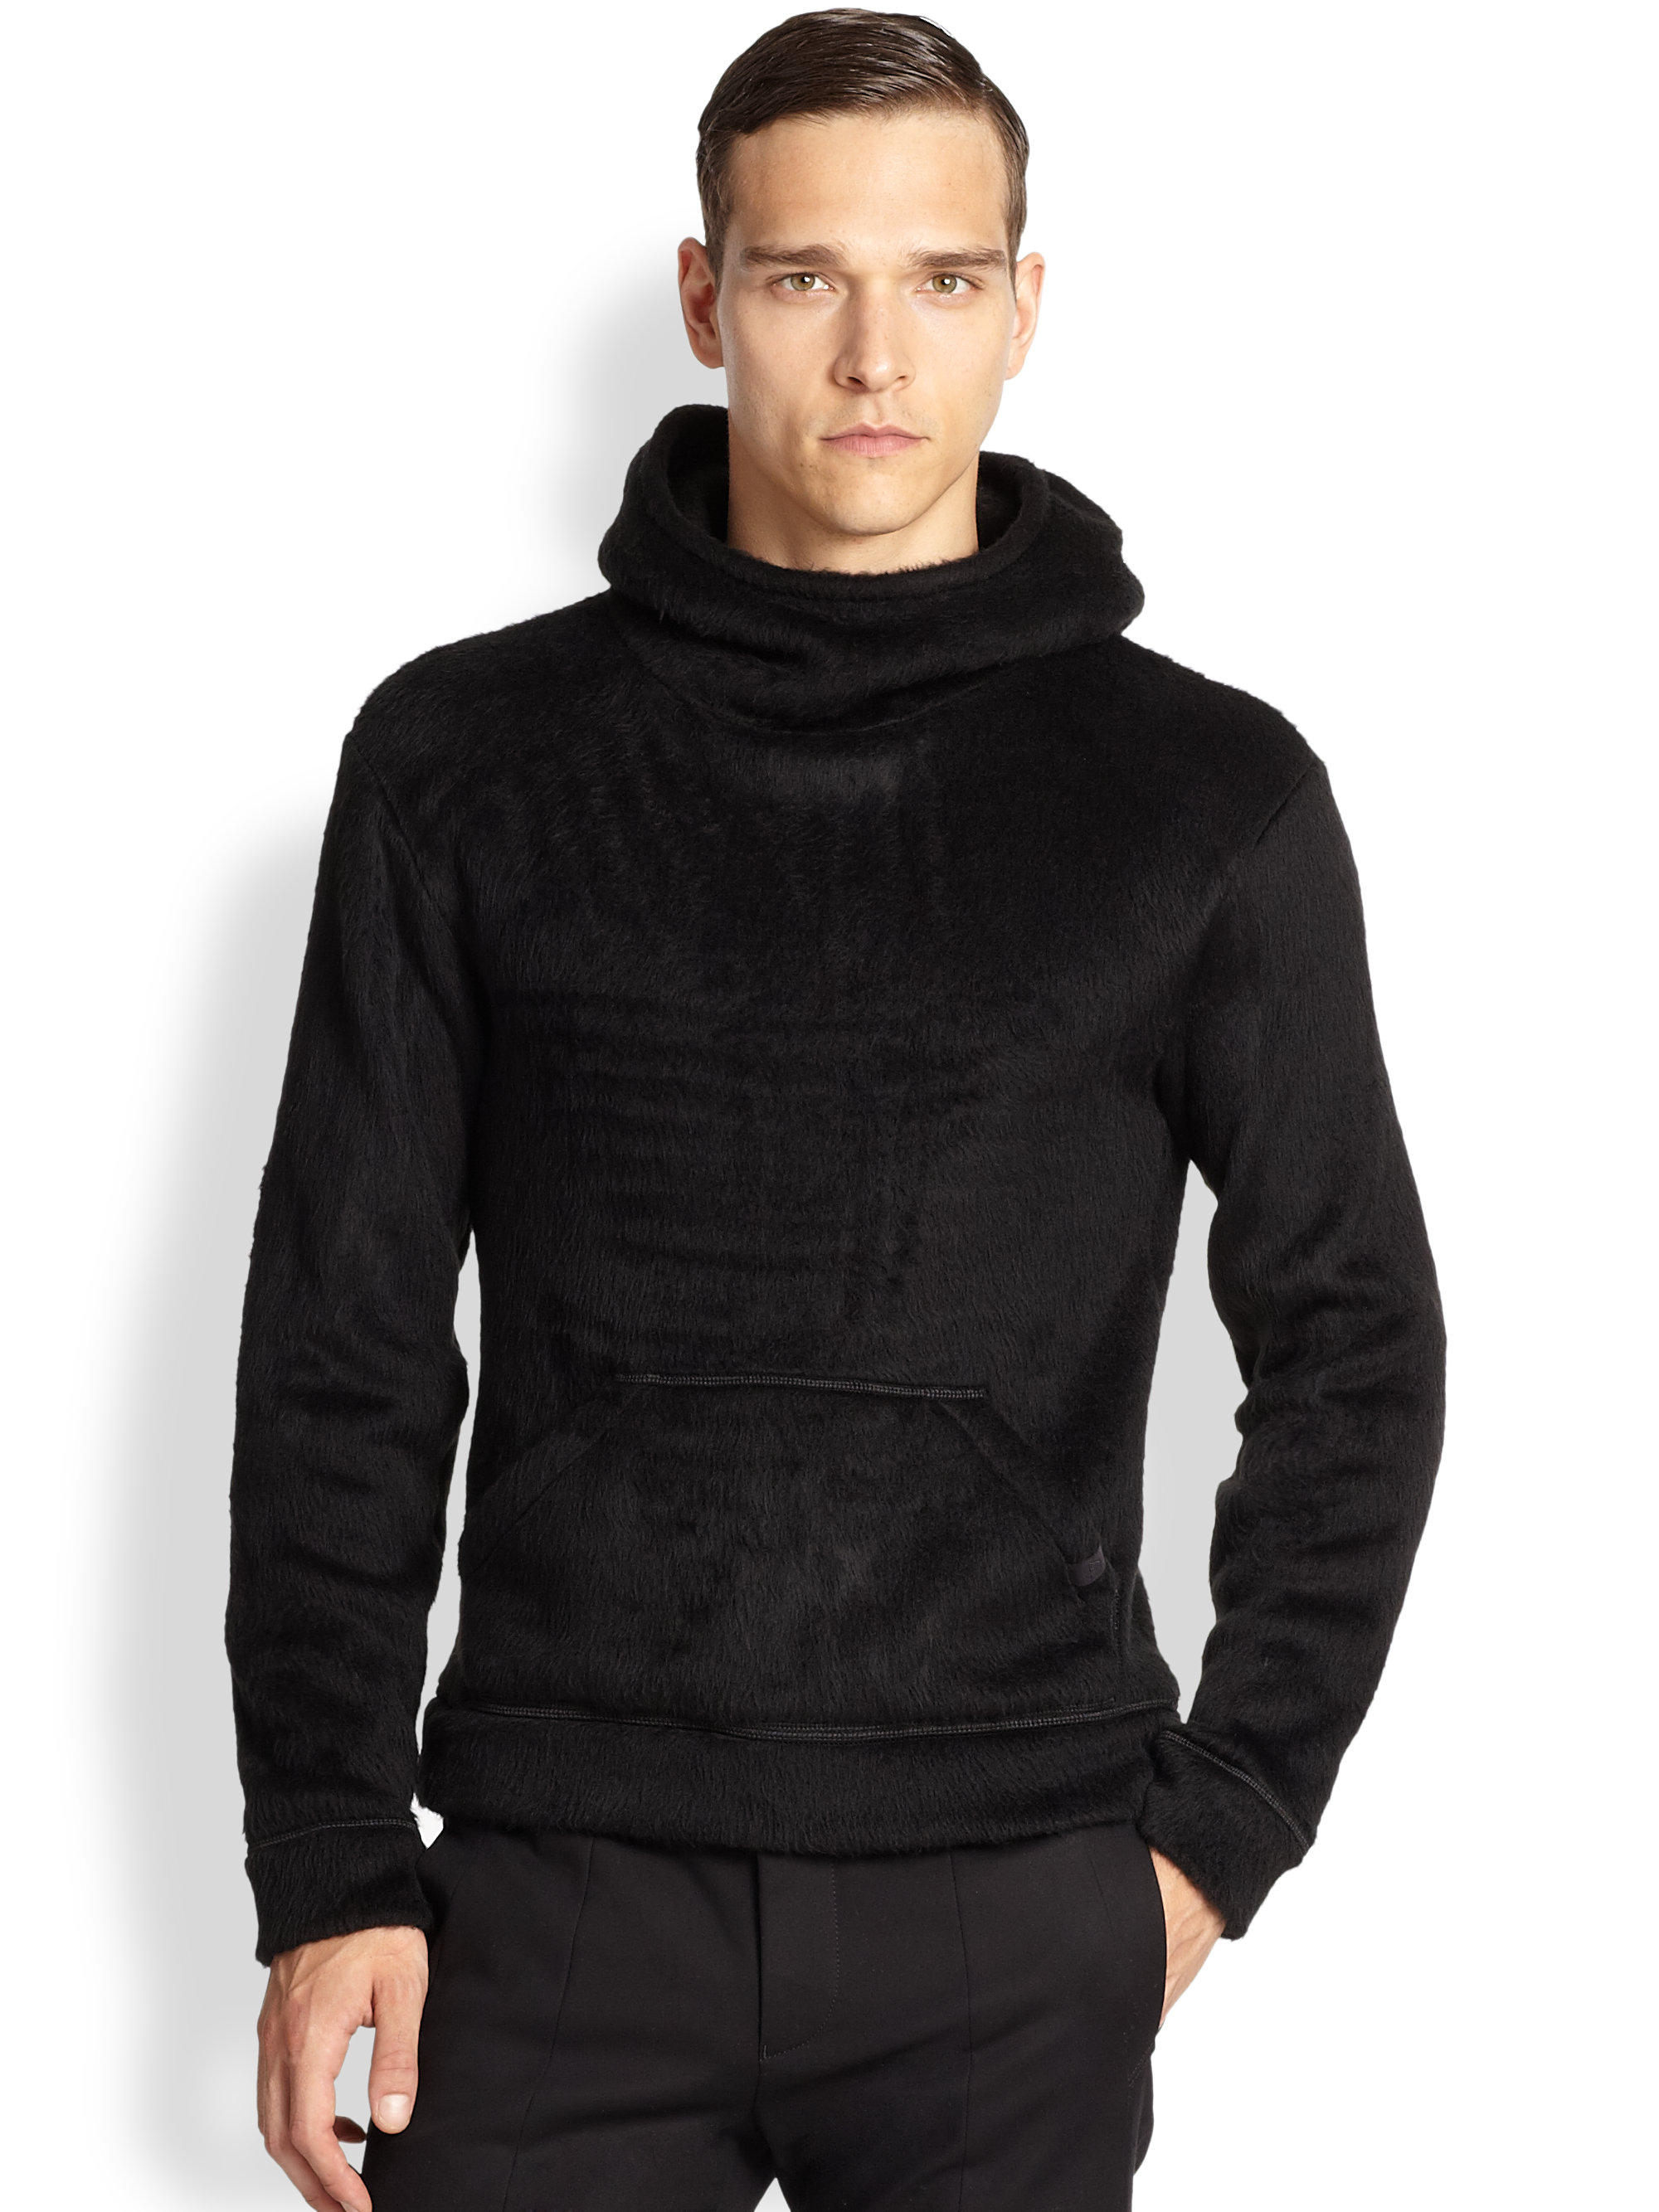 Emporio Armani Faux Fur Hoodie in Black for Men - Lyst